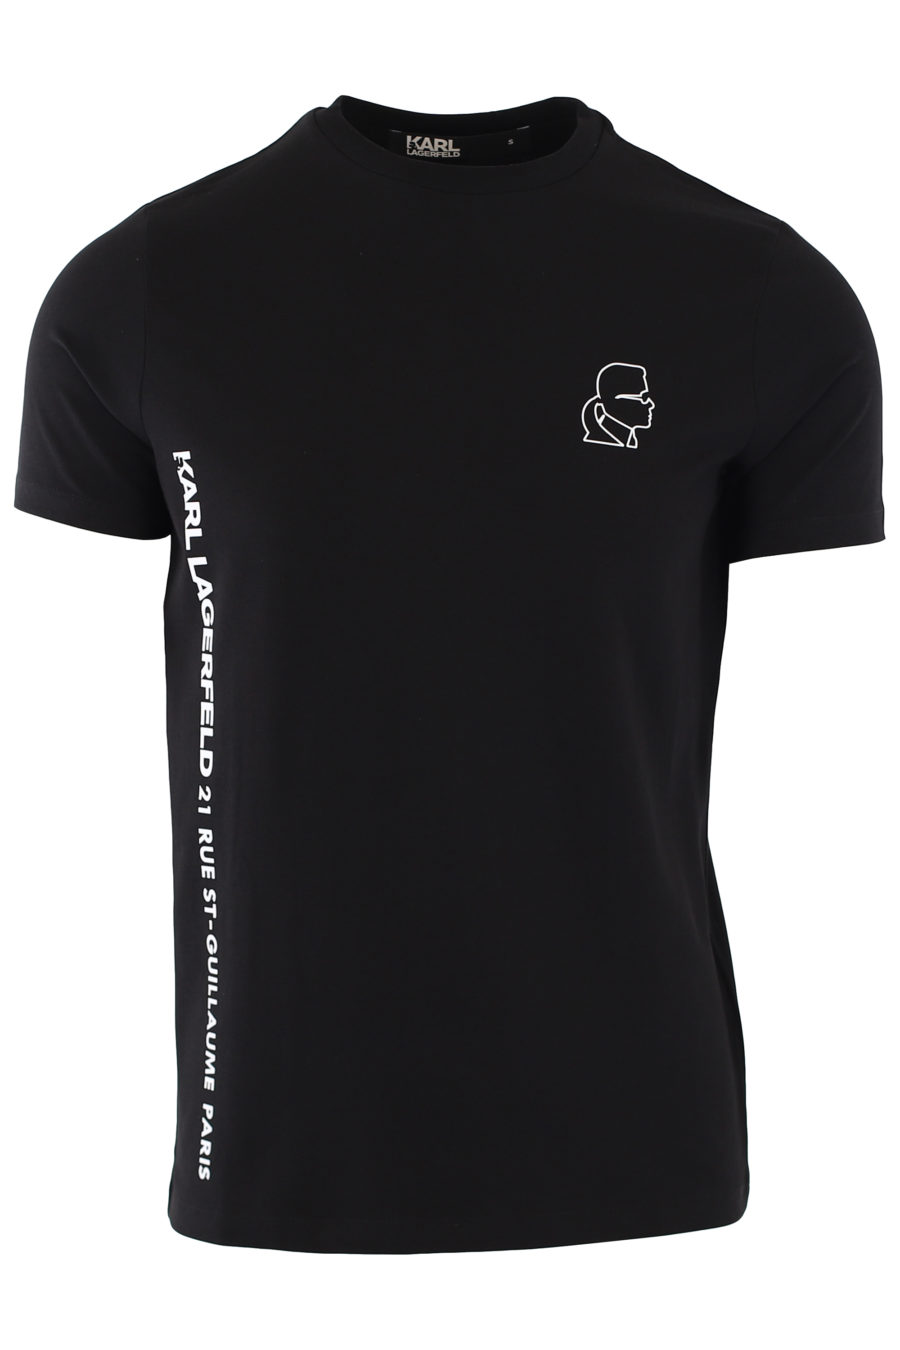 Camiseta negra con logo lateral pequeño - IMG 1372